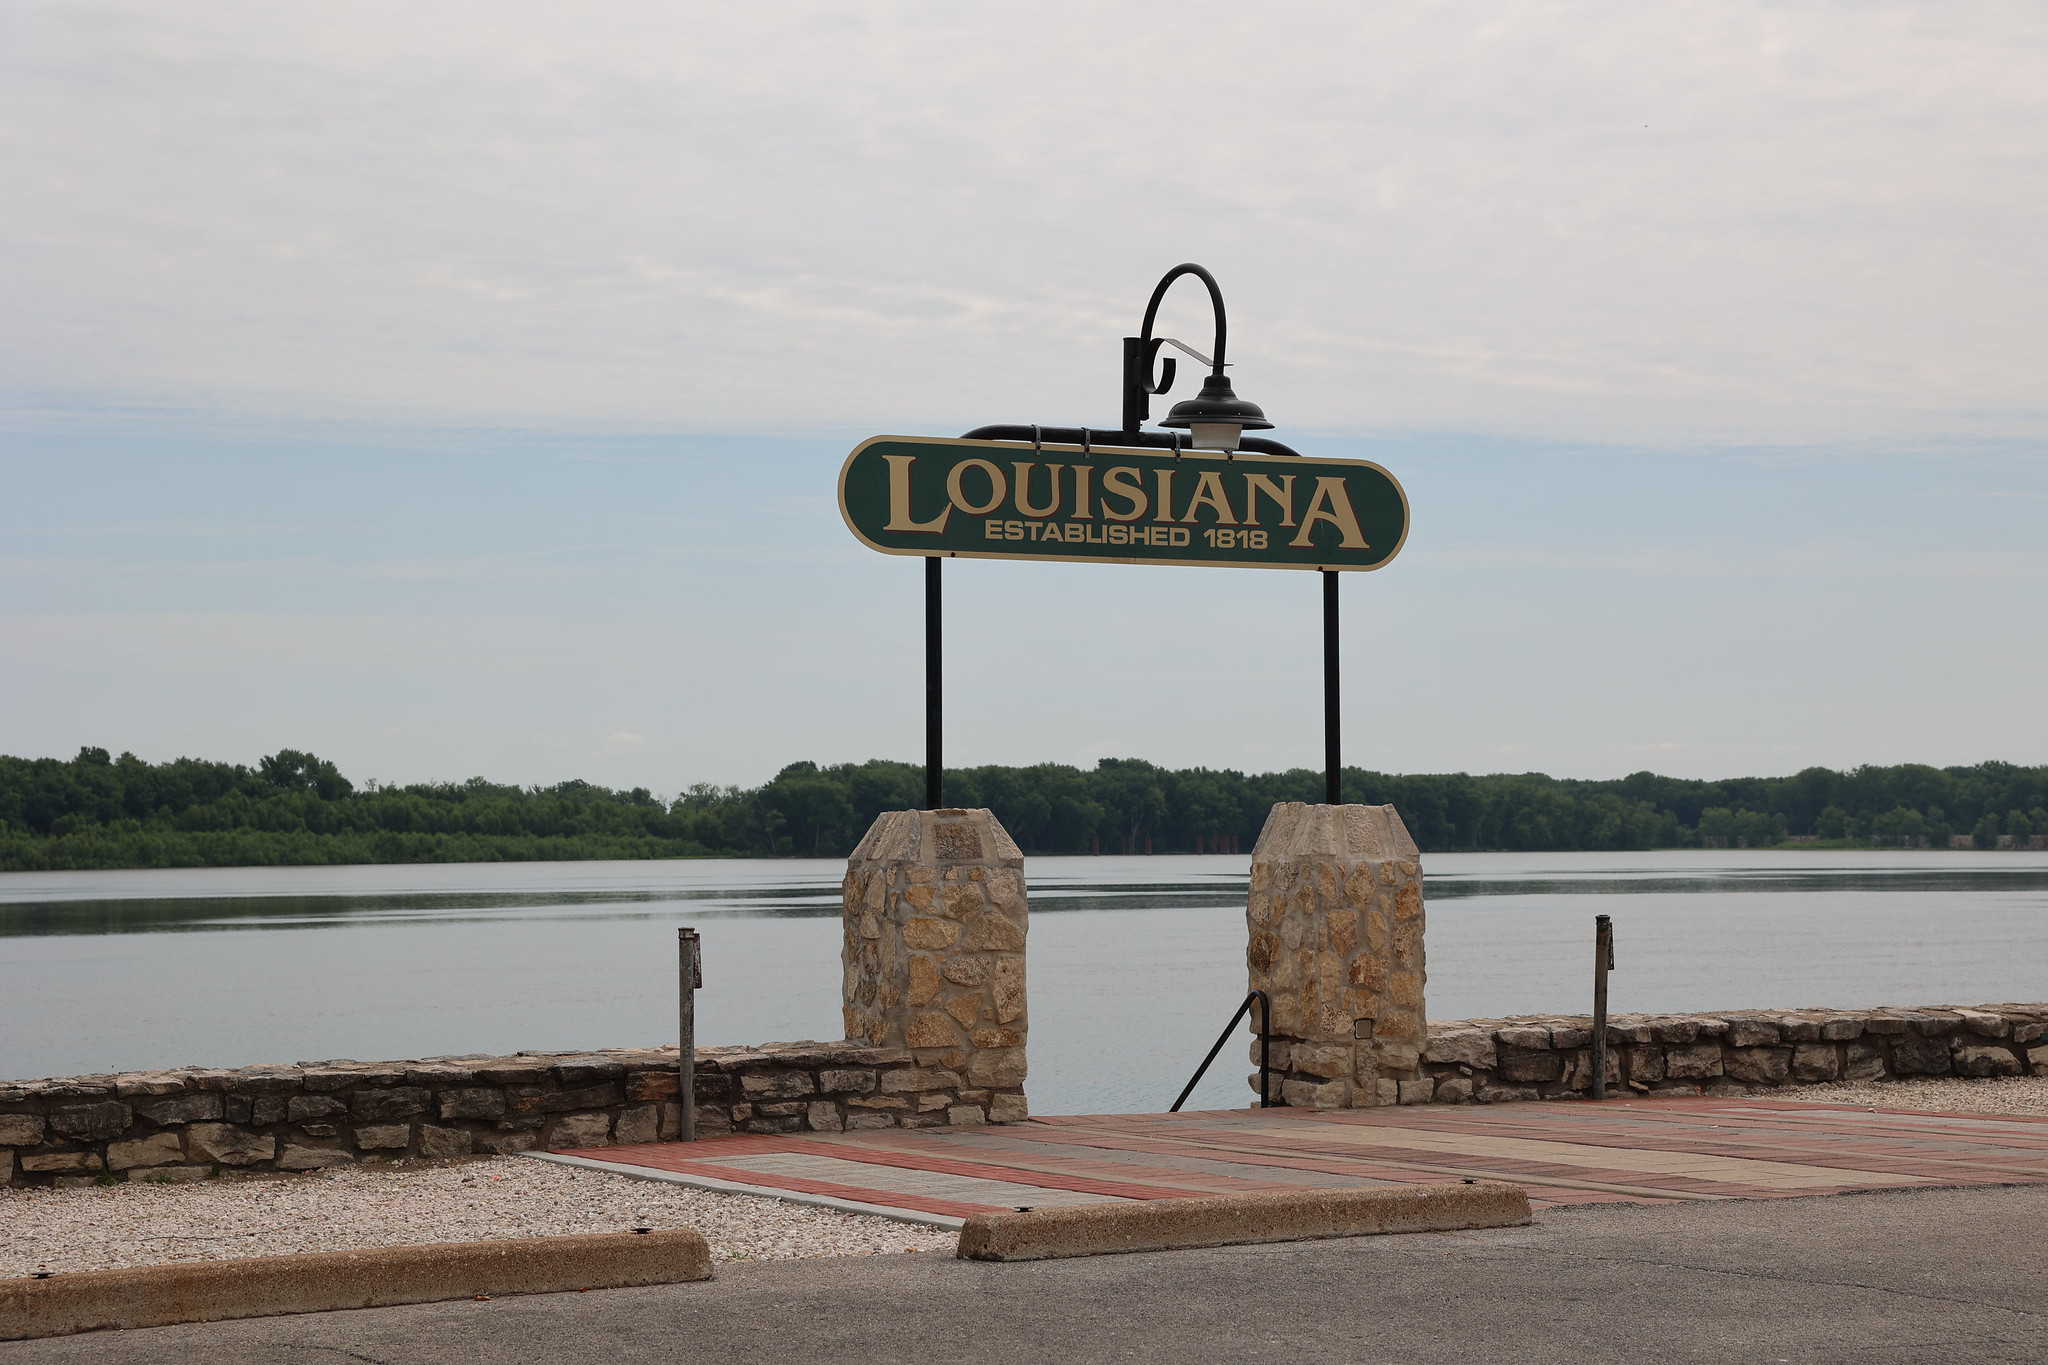 Louisiana, Mo., established in 1818. Photo by Bill Motchan.